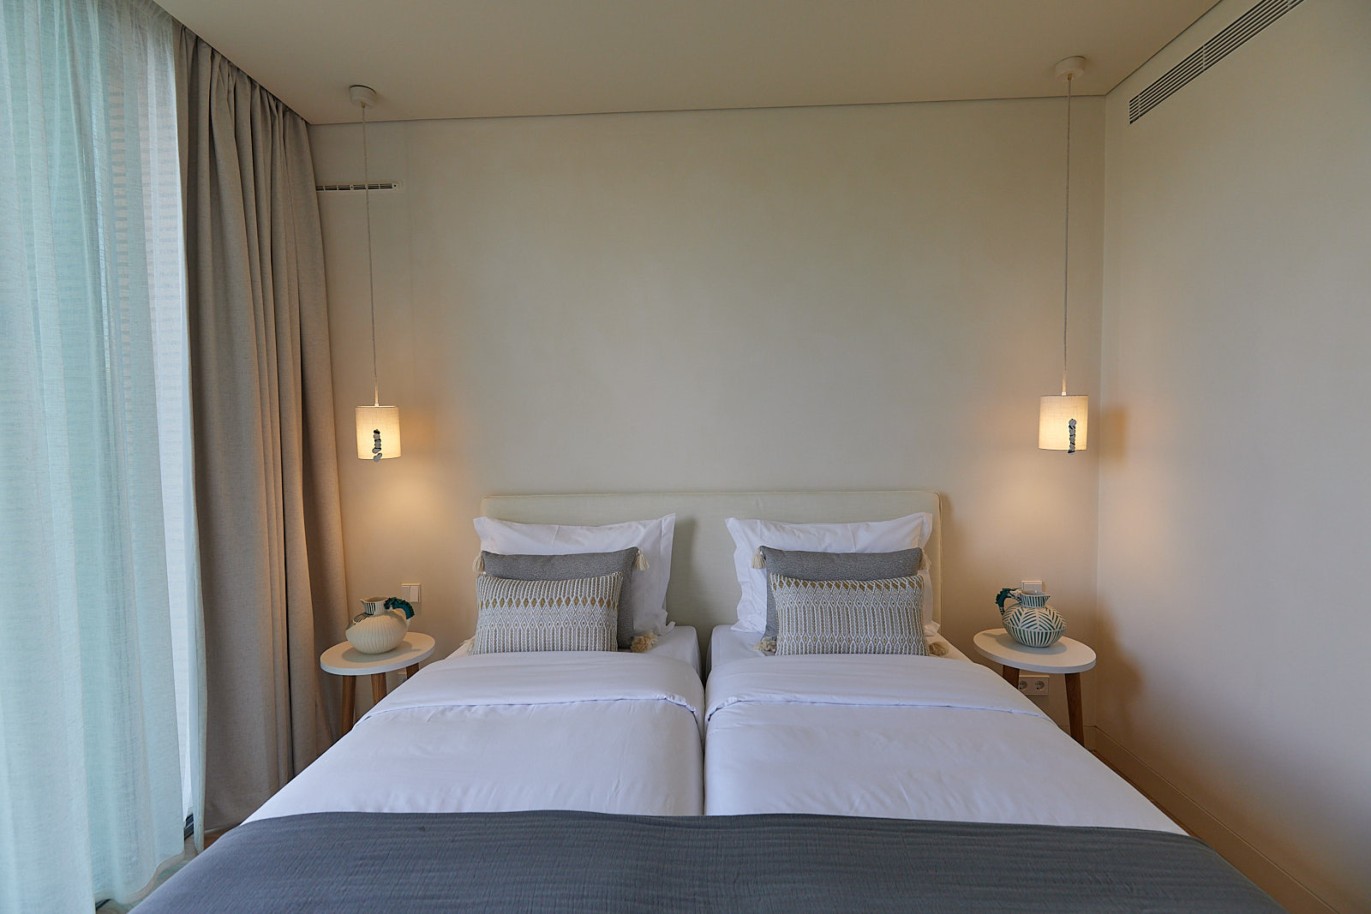 2 bedroom apartment in resort, for sale in Porches, Algarve_228778